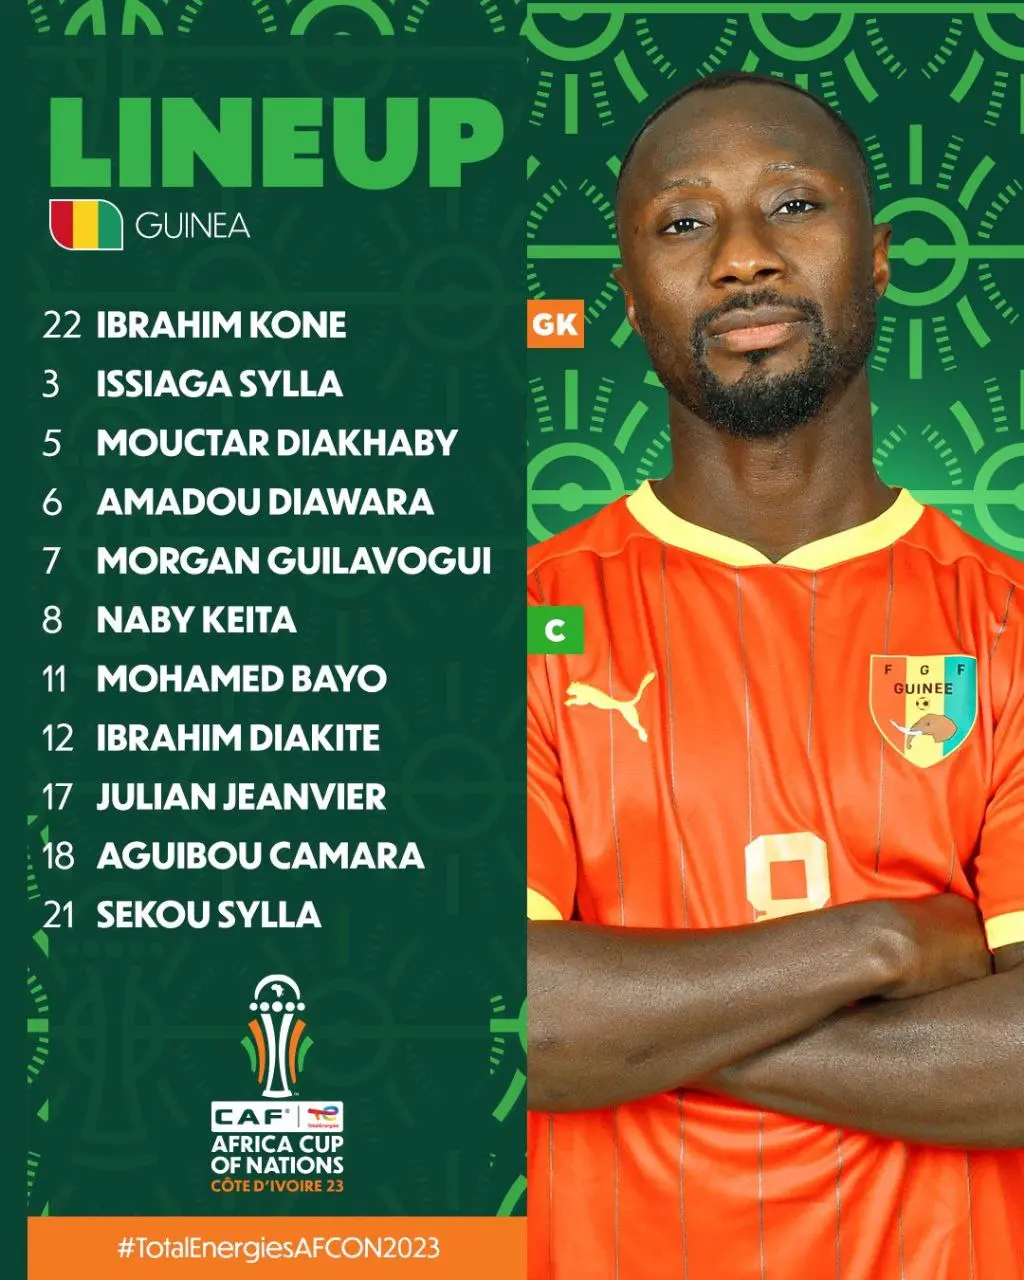 اعلام ترکیب دو تیم ملی کنگو و گینه